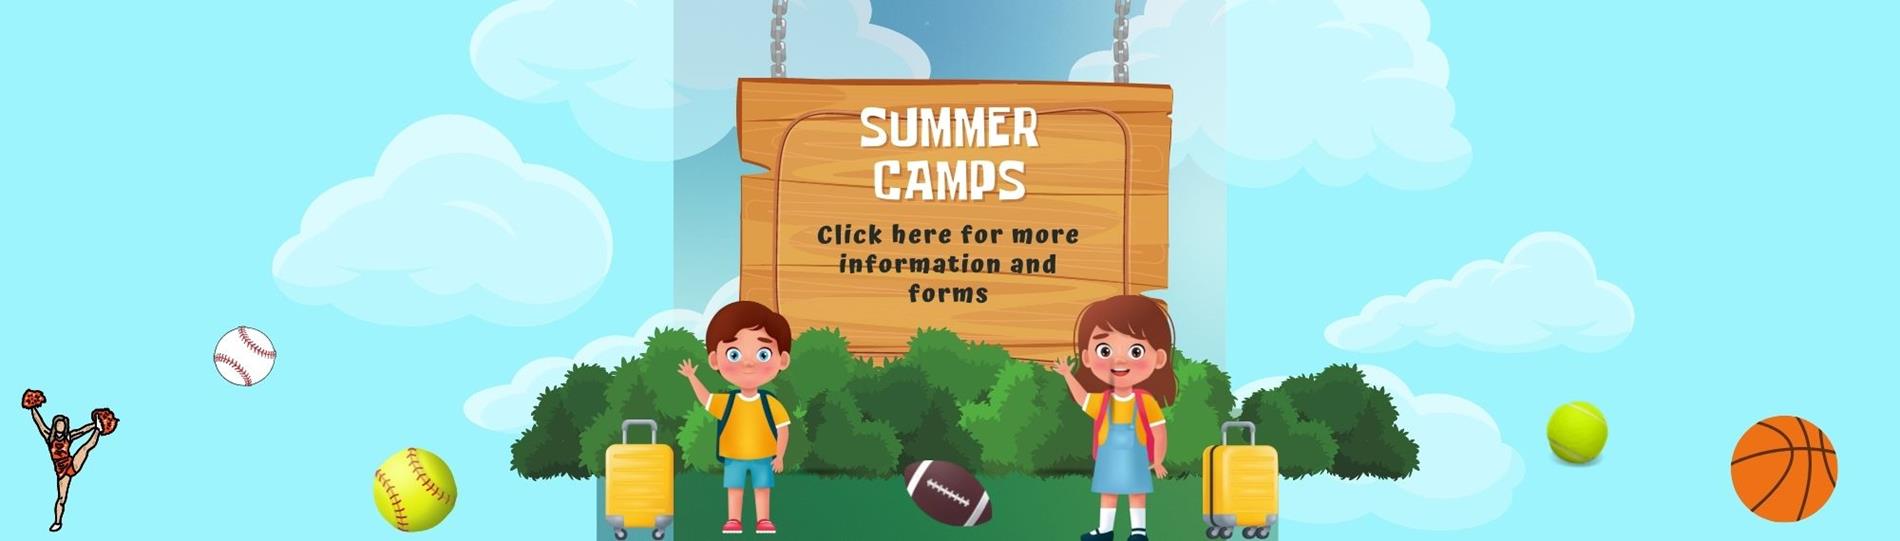 summer camp information